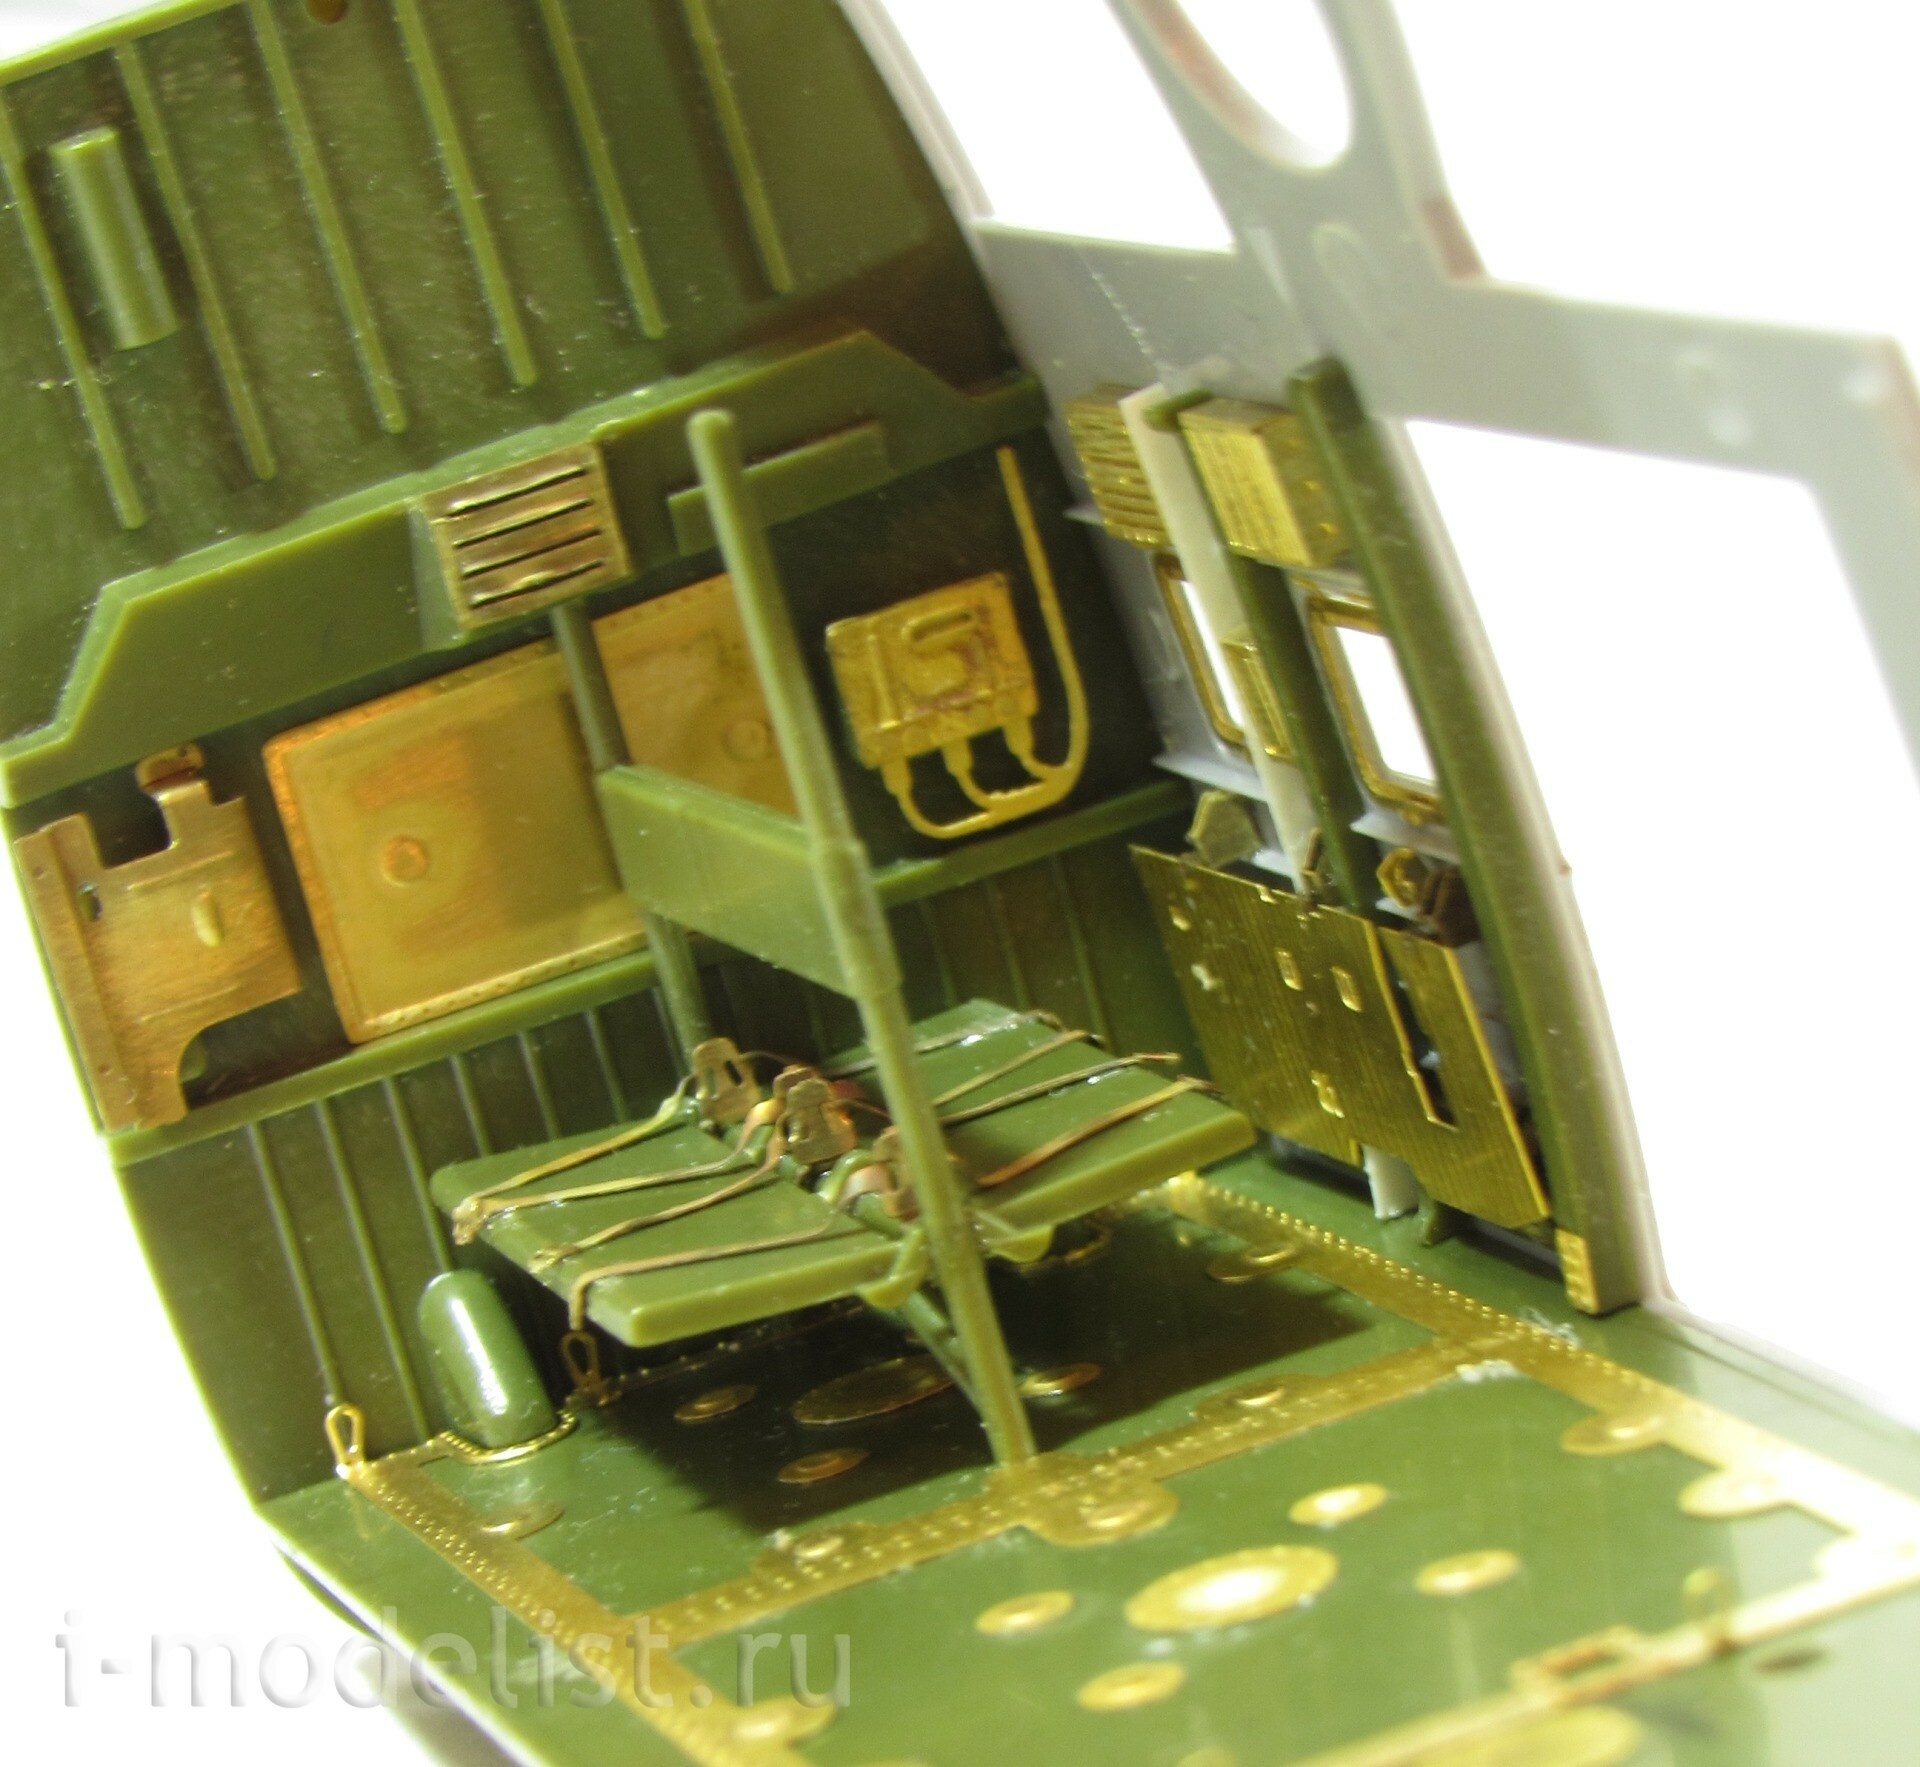 048242 Microdisign 1/48 photo etching Kit amphibious transport compartment (Zvezda)